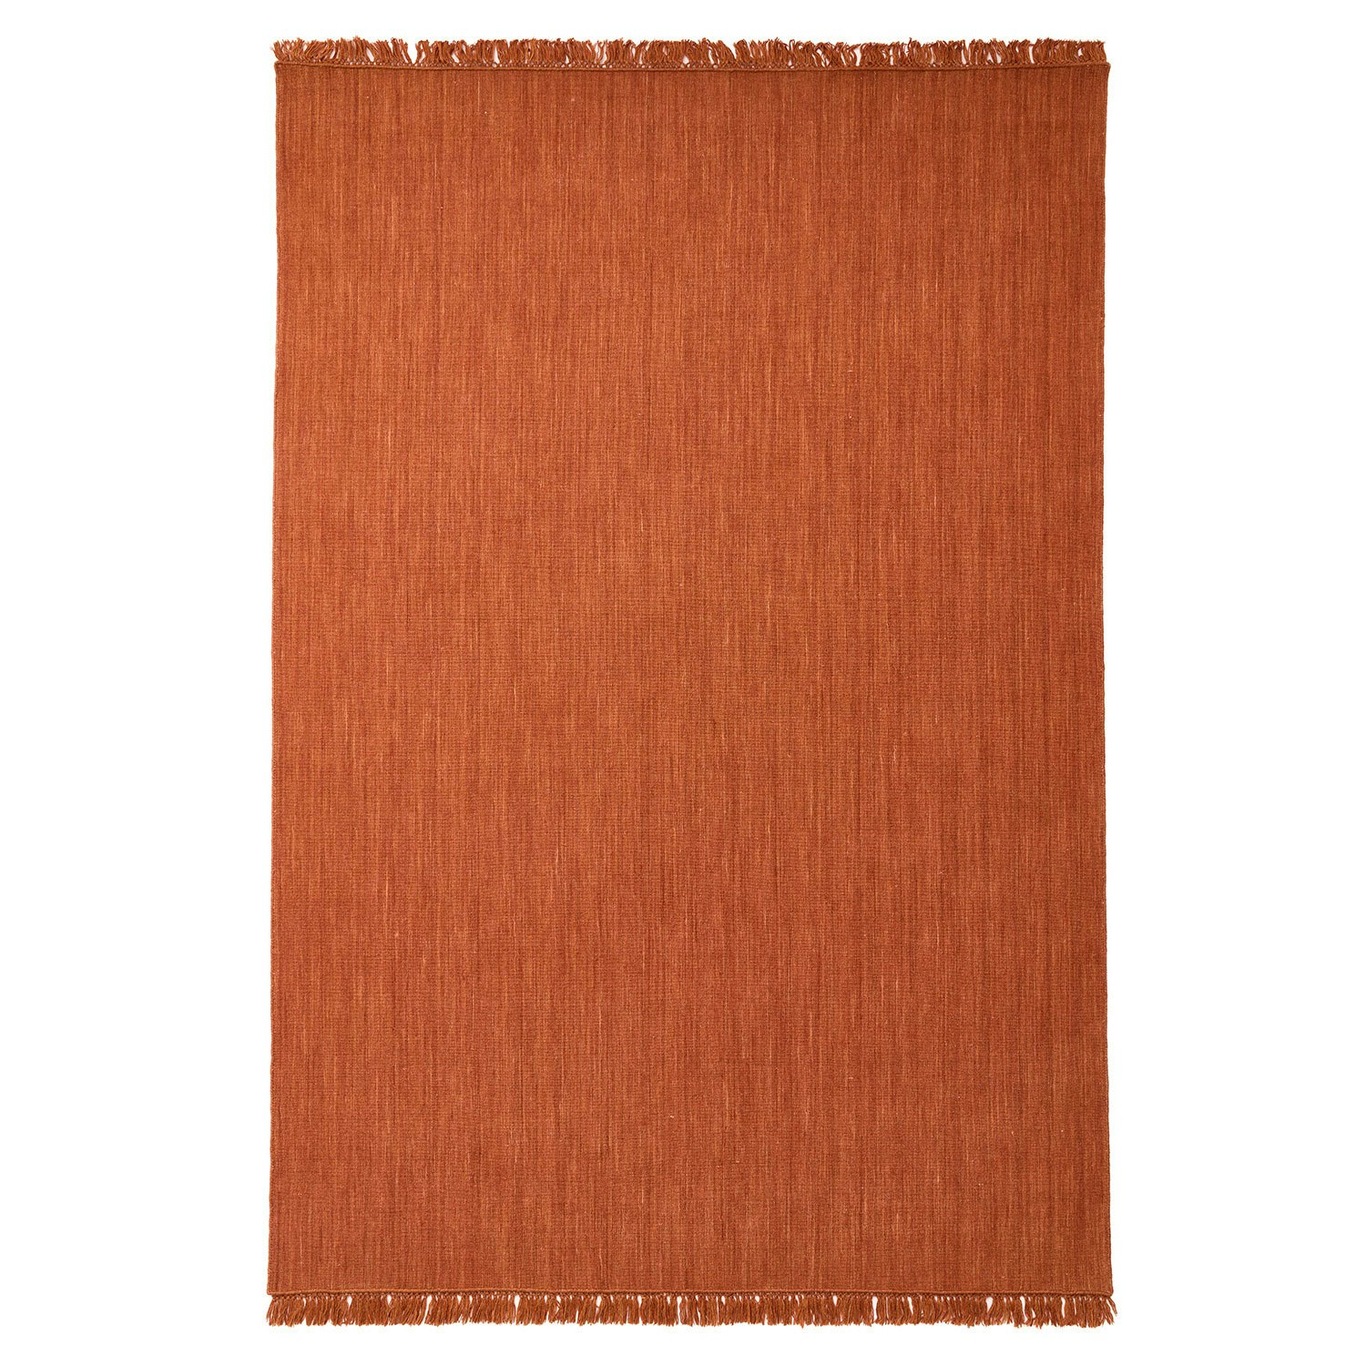 Nanda Teppich Rust Melange, 170x240 cm